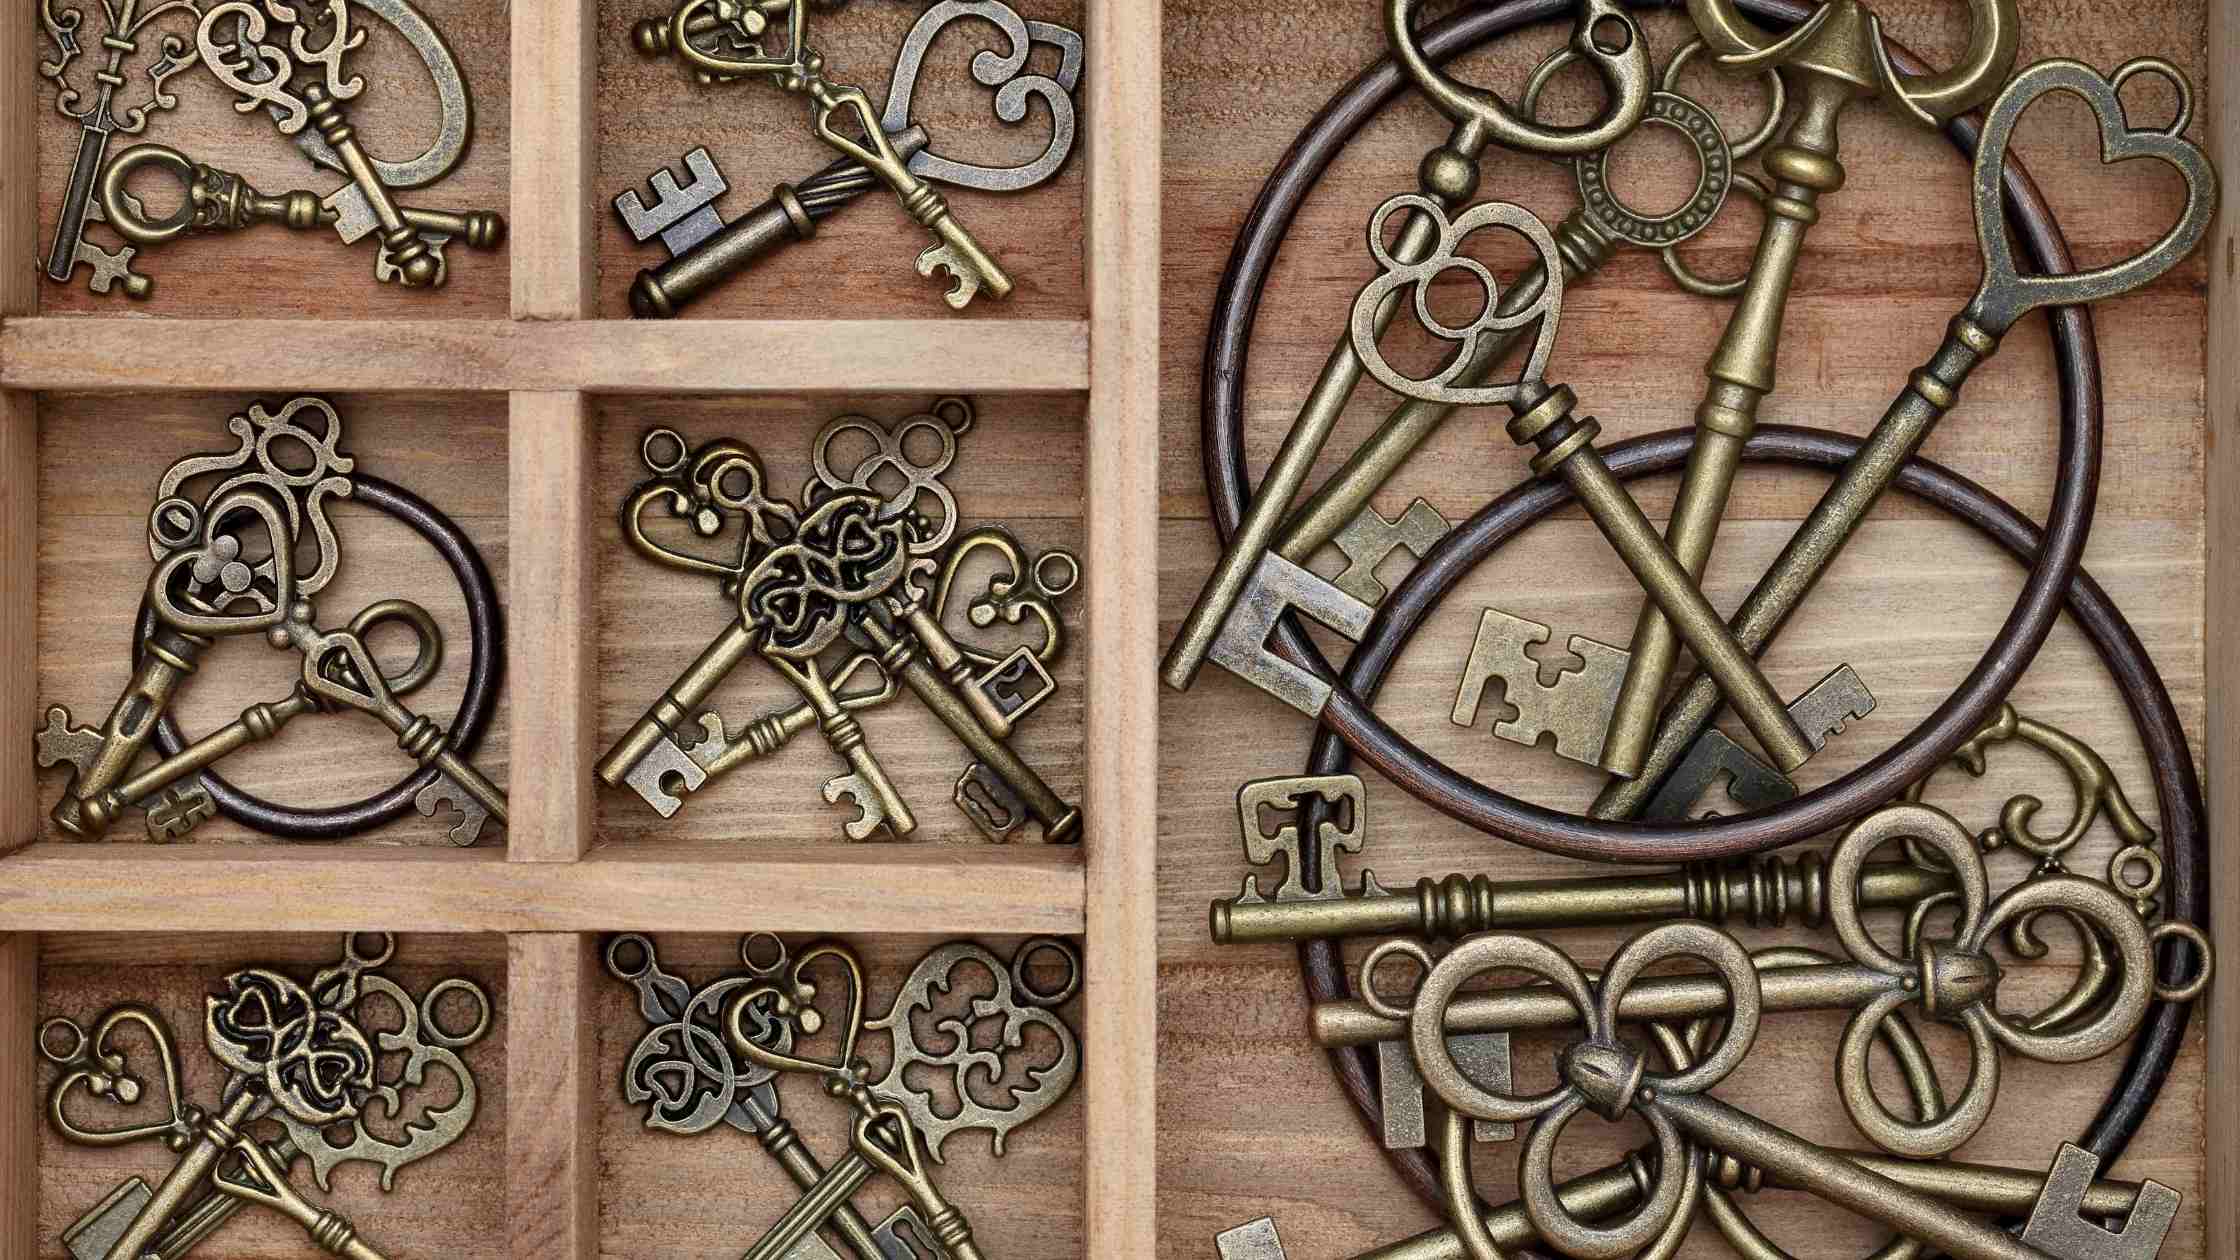 Vintage keys in a wooden box